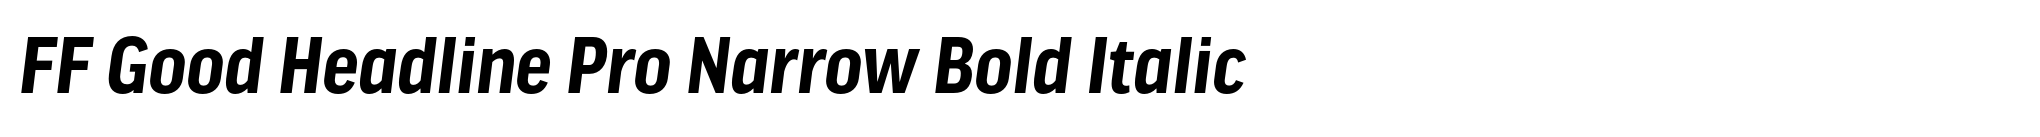 FF Good Headline Pro Narrow Bold Italic image